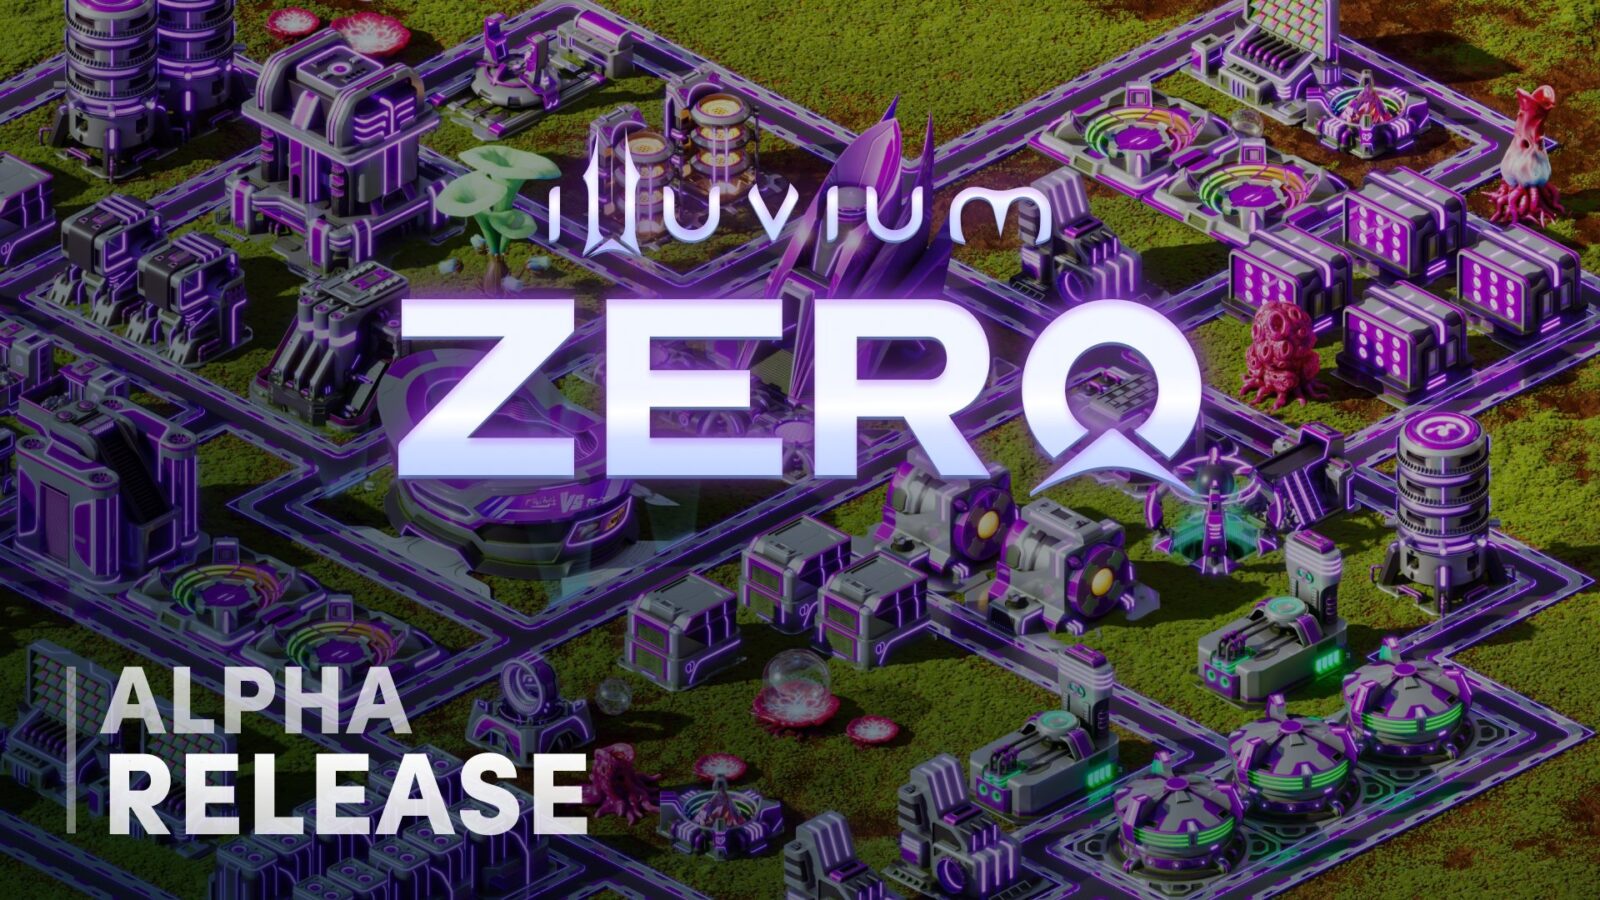 P2E game Illuvium announced that its third blockchain-based game Zero is just around the corner. Tomorrow, Jan. 6, the Illivium: Zero private alpha will be kick-started.